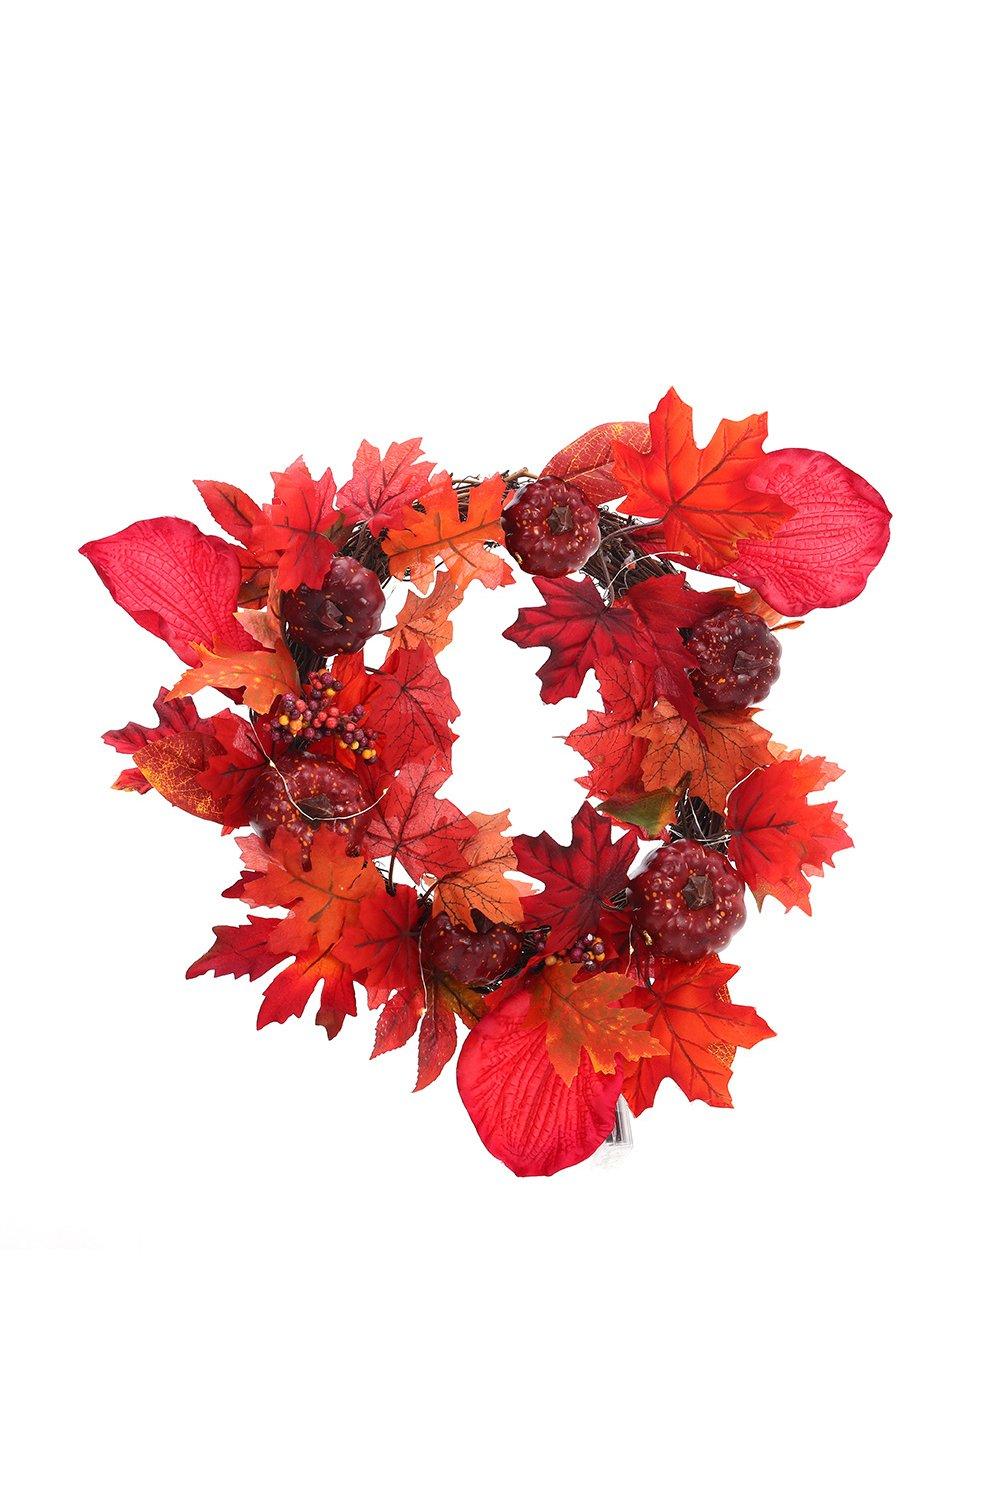 Halloween Thanksgiving Fall Maple Leaf Pumpkin Wreath Artificial Wreath Front Door Decoration